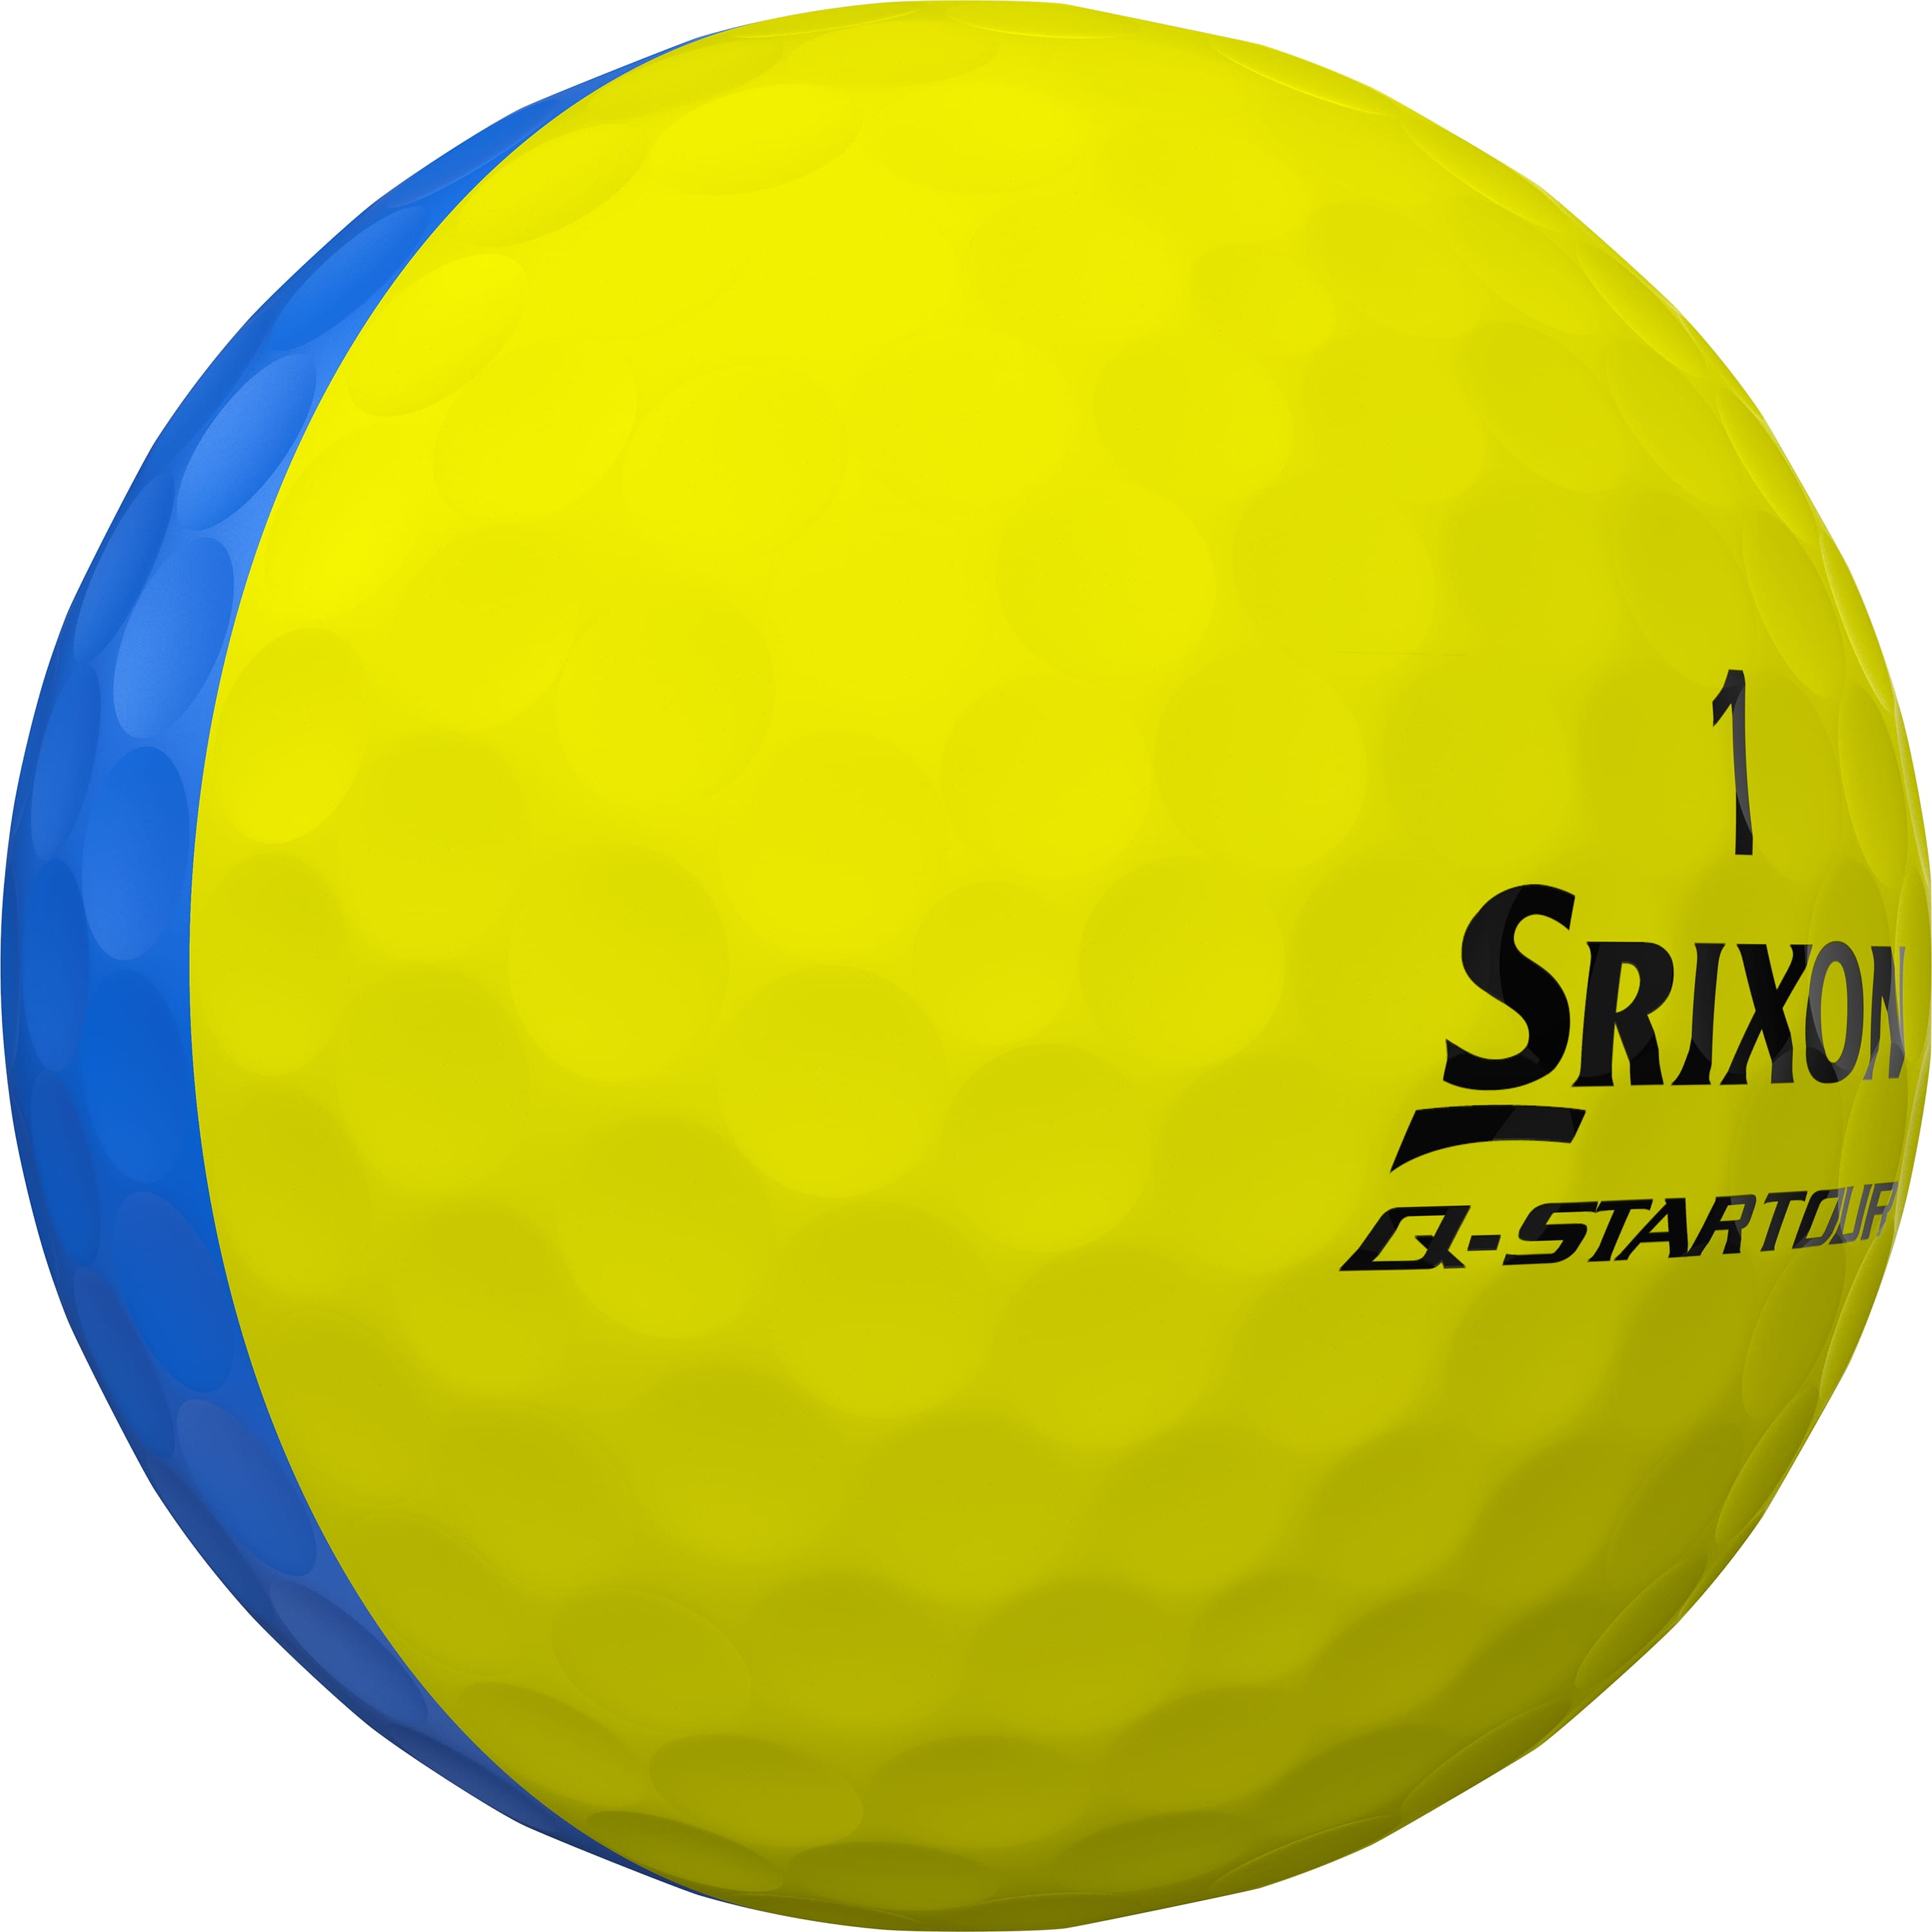 Srixon Q-Star Tour DIVIDE Golfbälle, yellow/blue